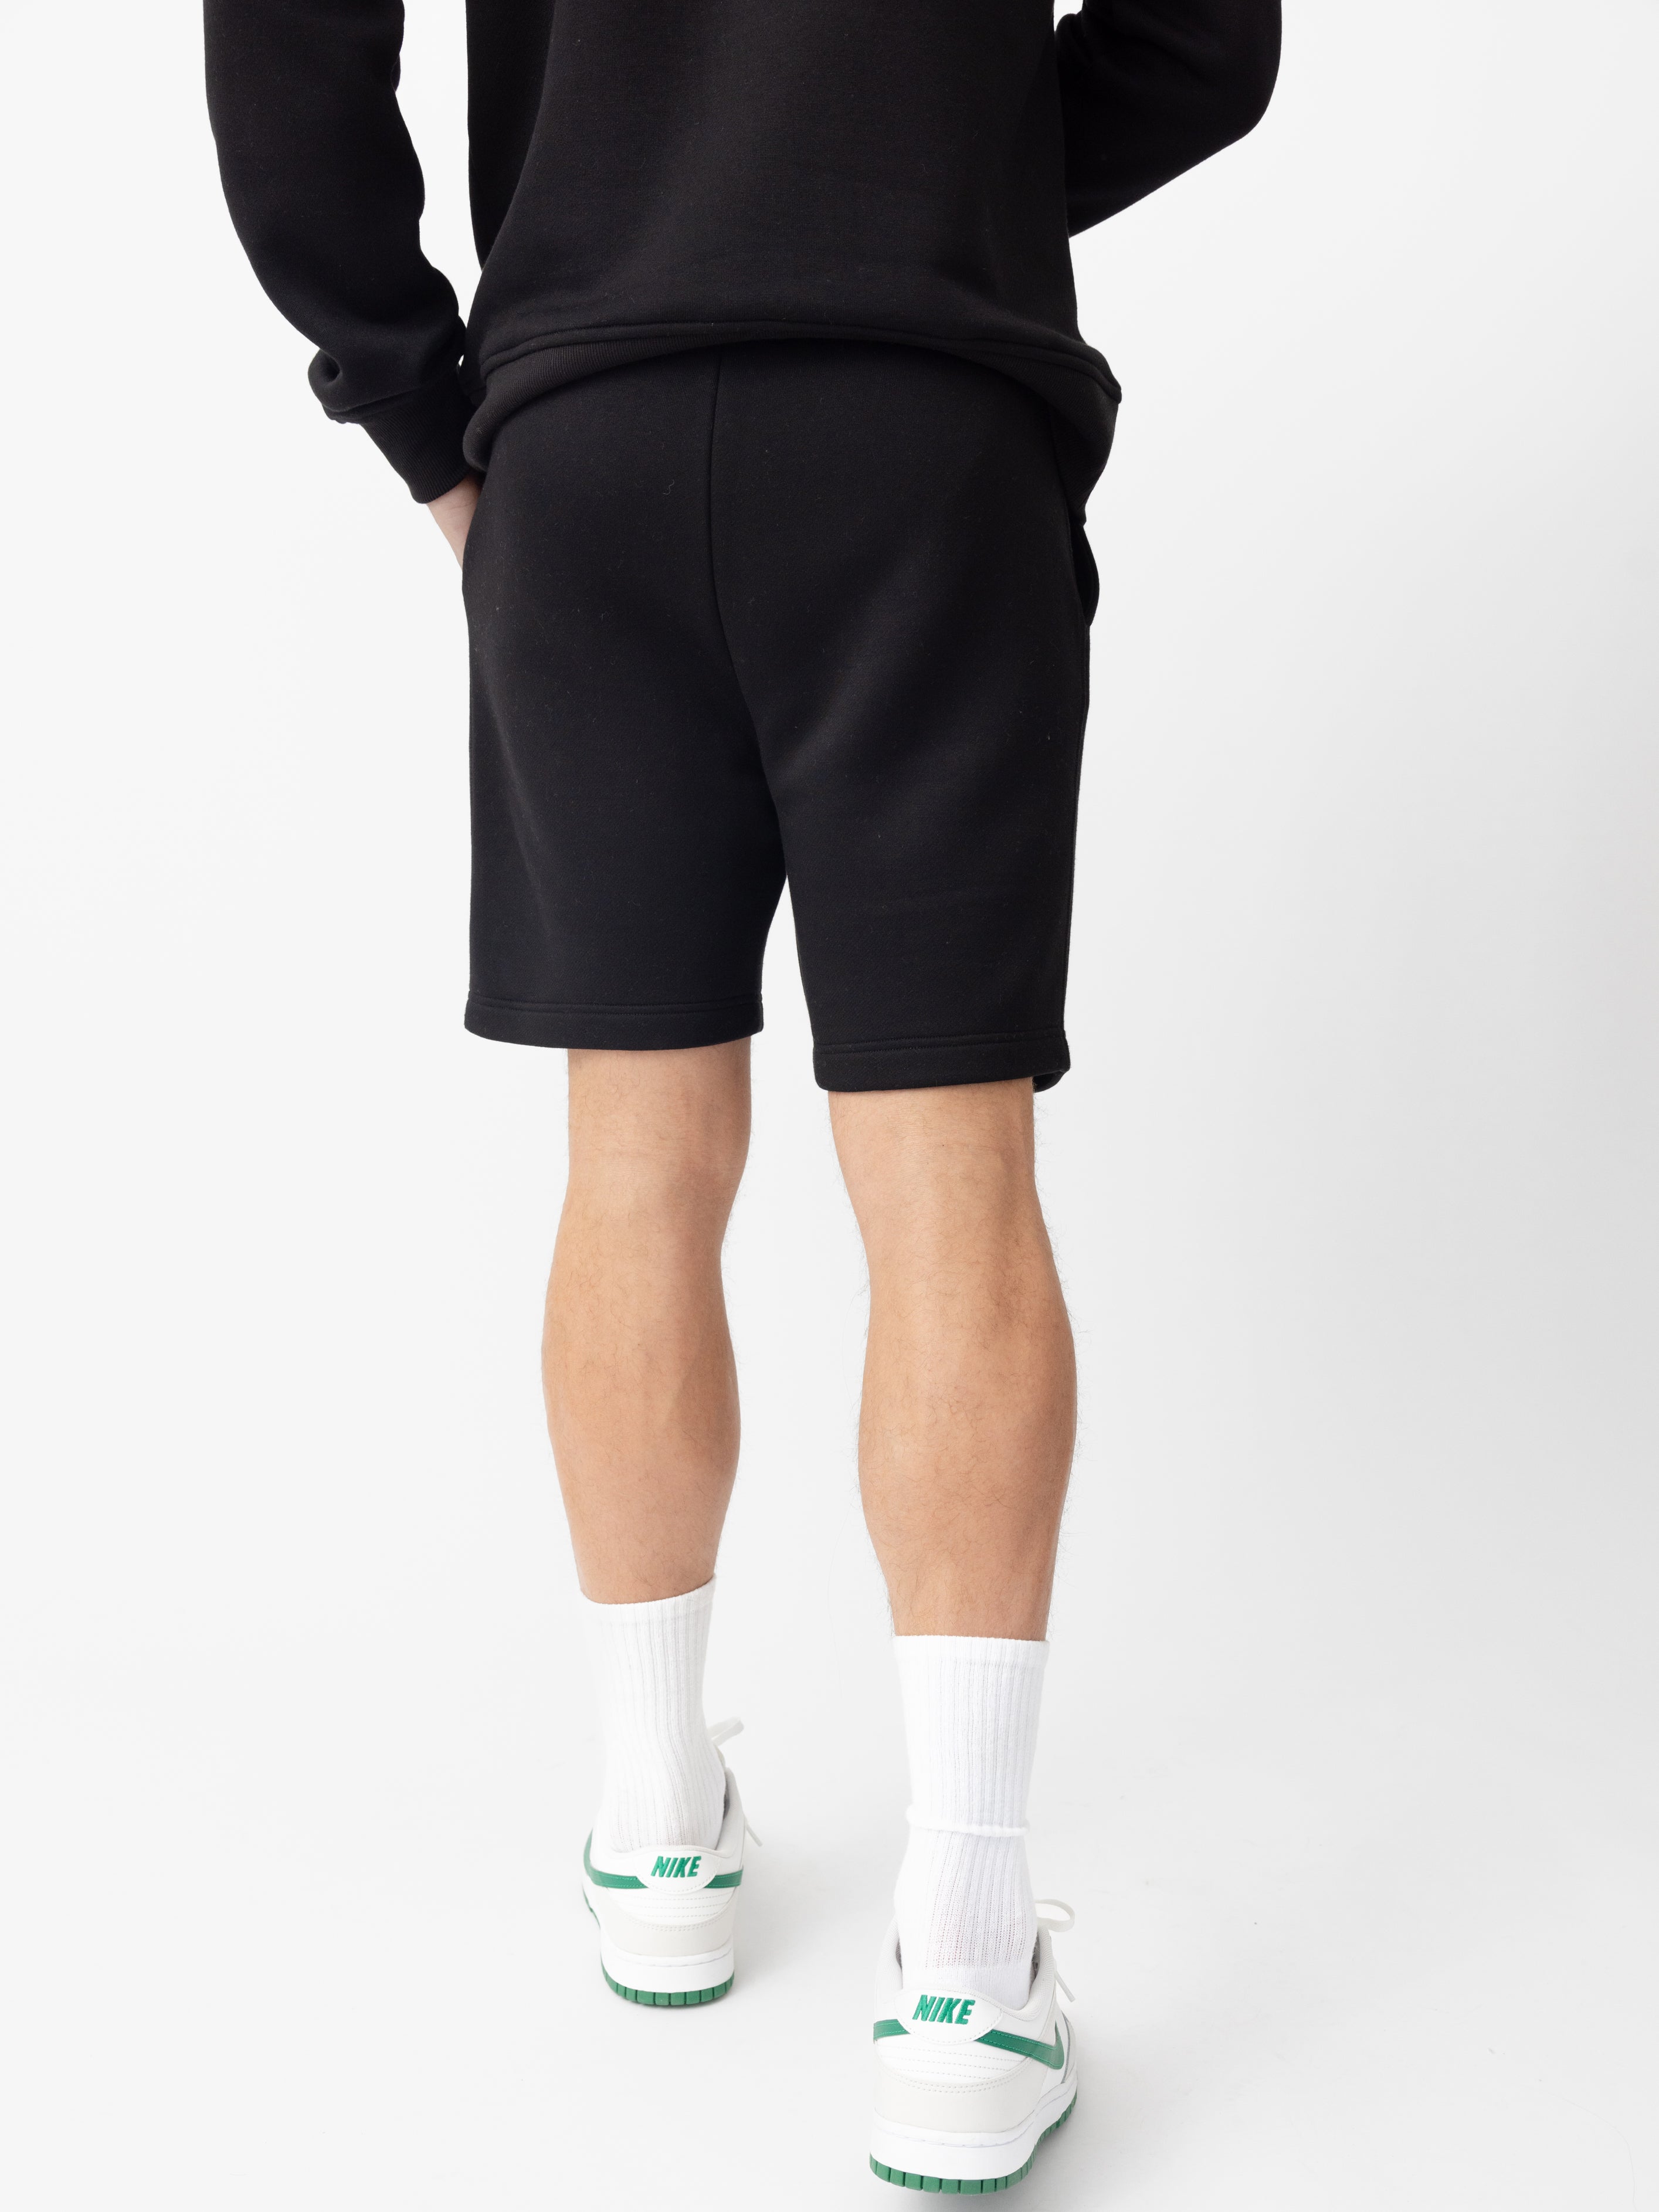 Back of man wearing black cityscape shorts |Color:Black